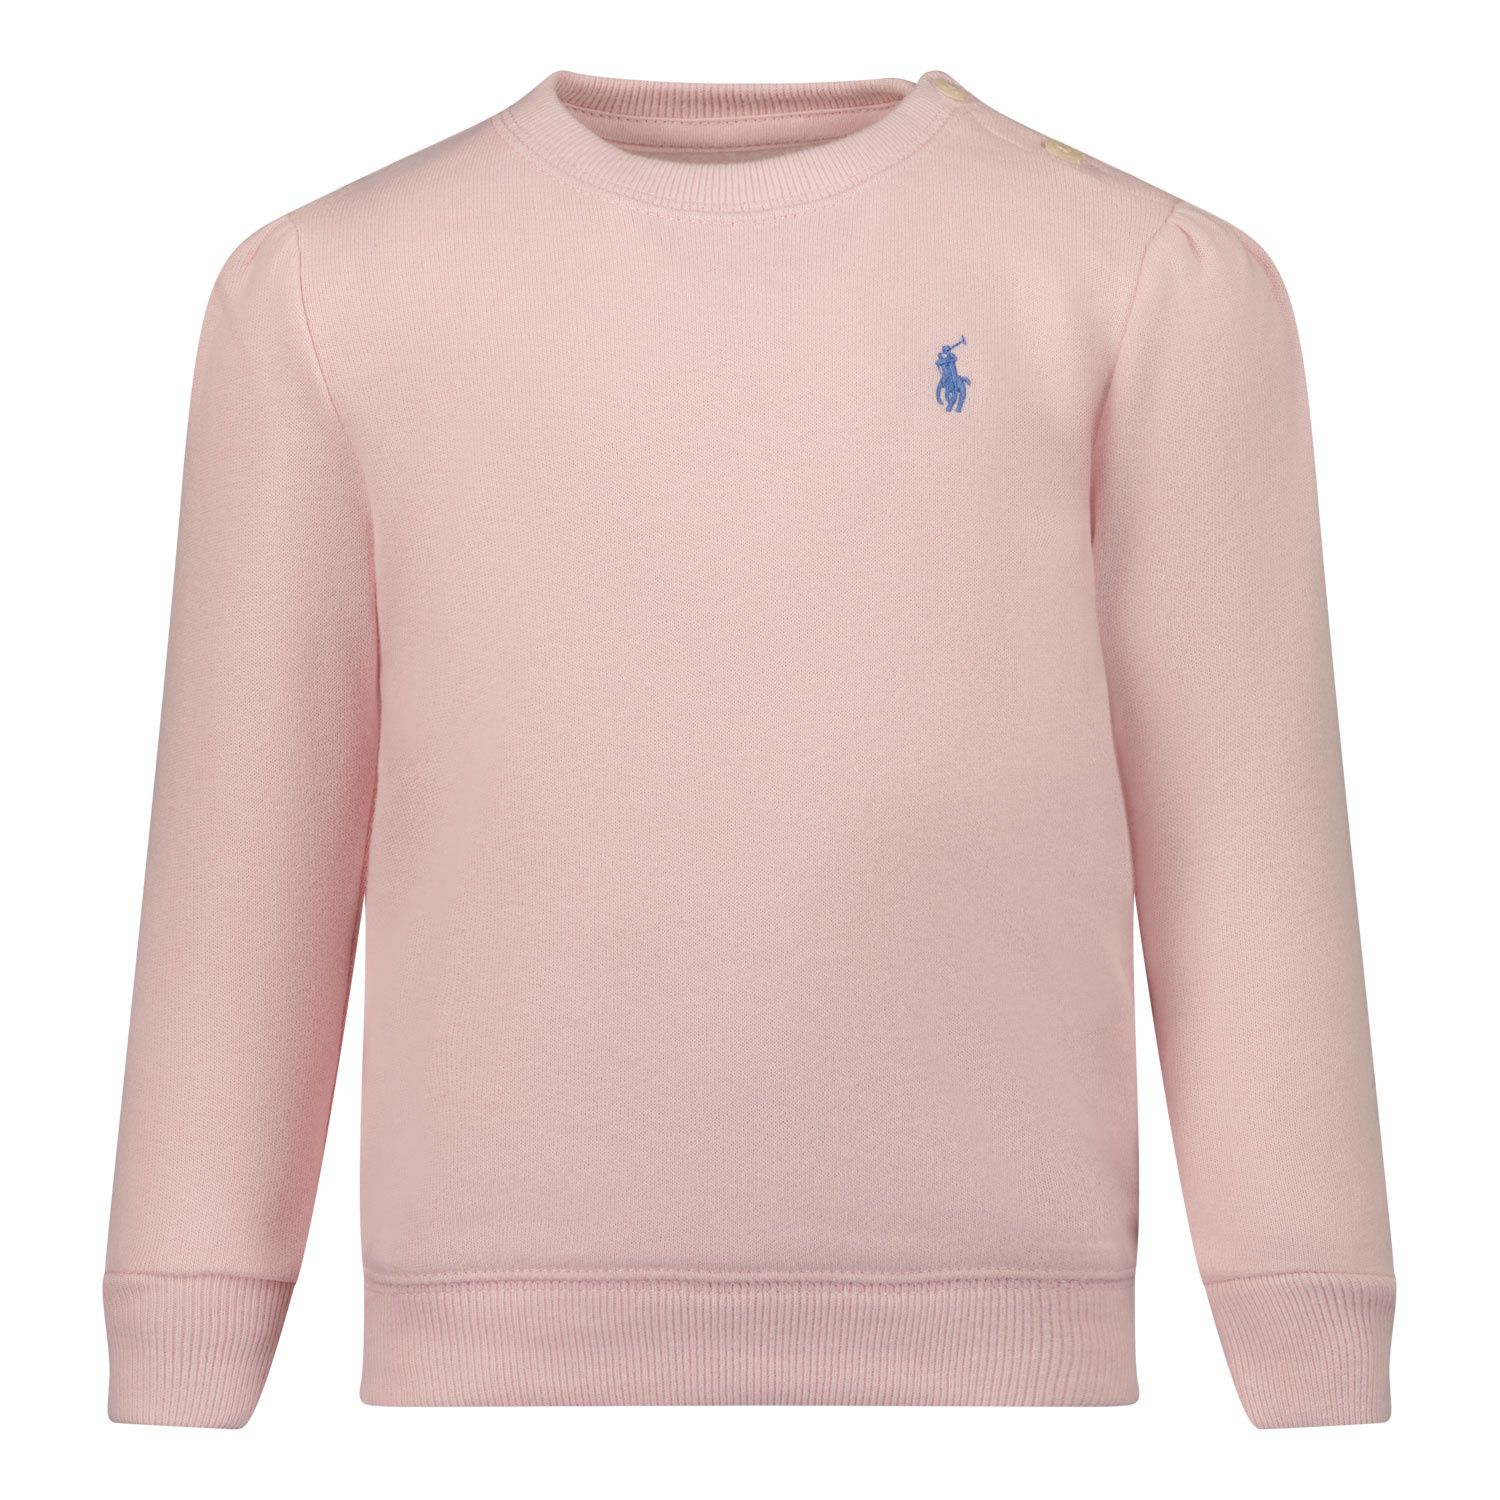 Picture of Ralph Lauren 310844839 baby sweater light pink